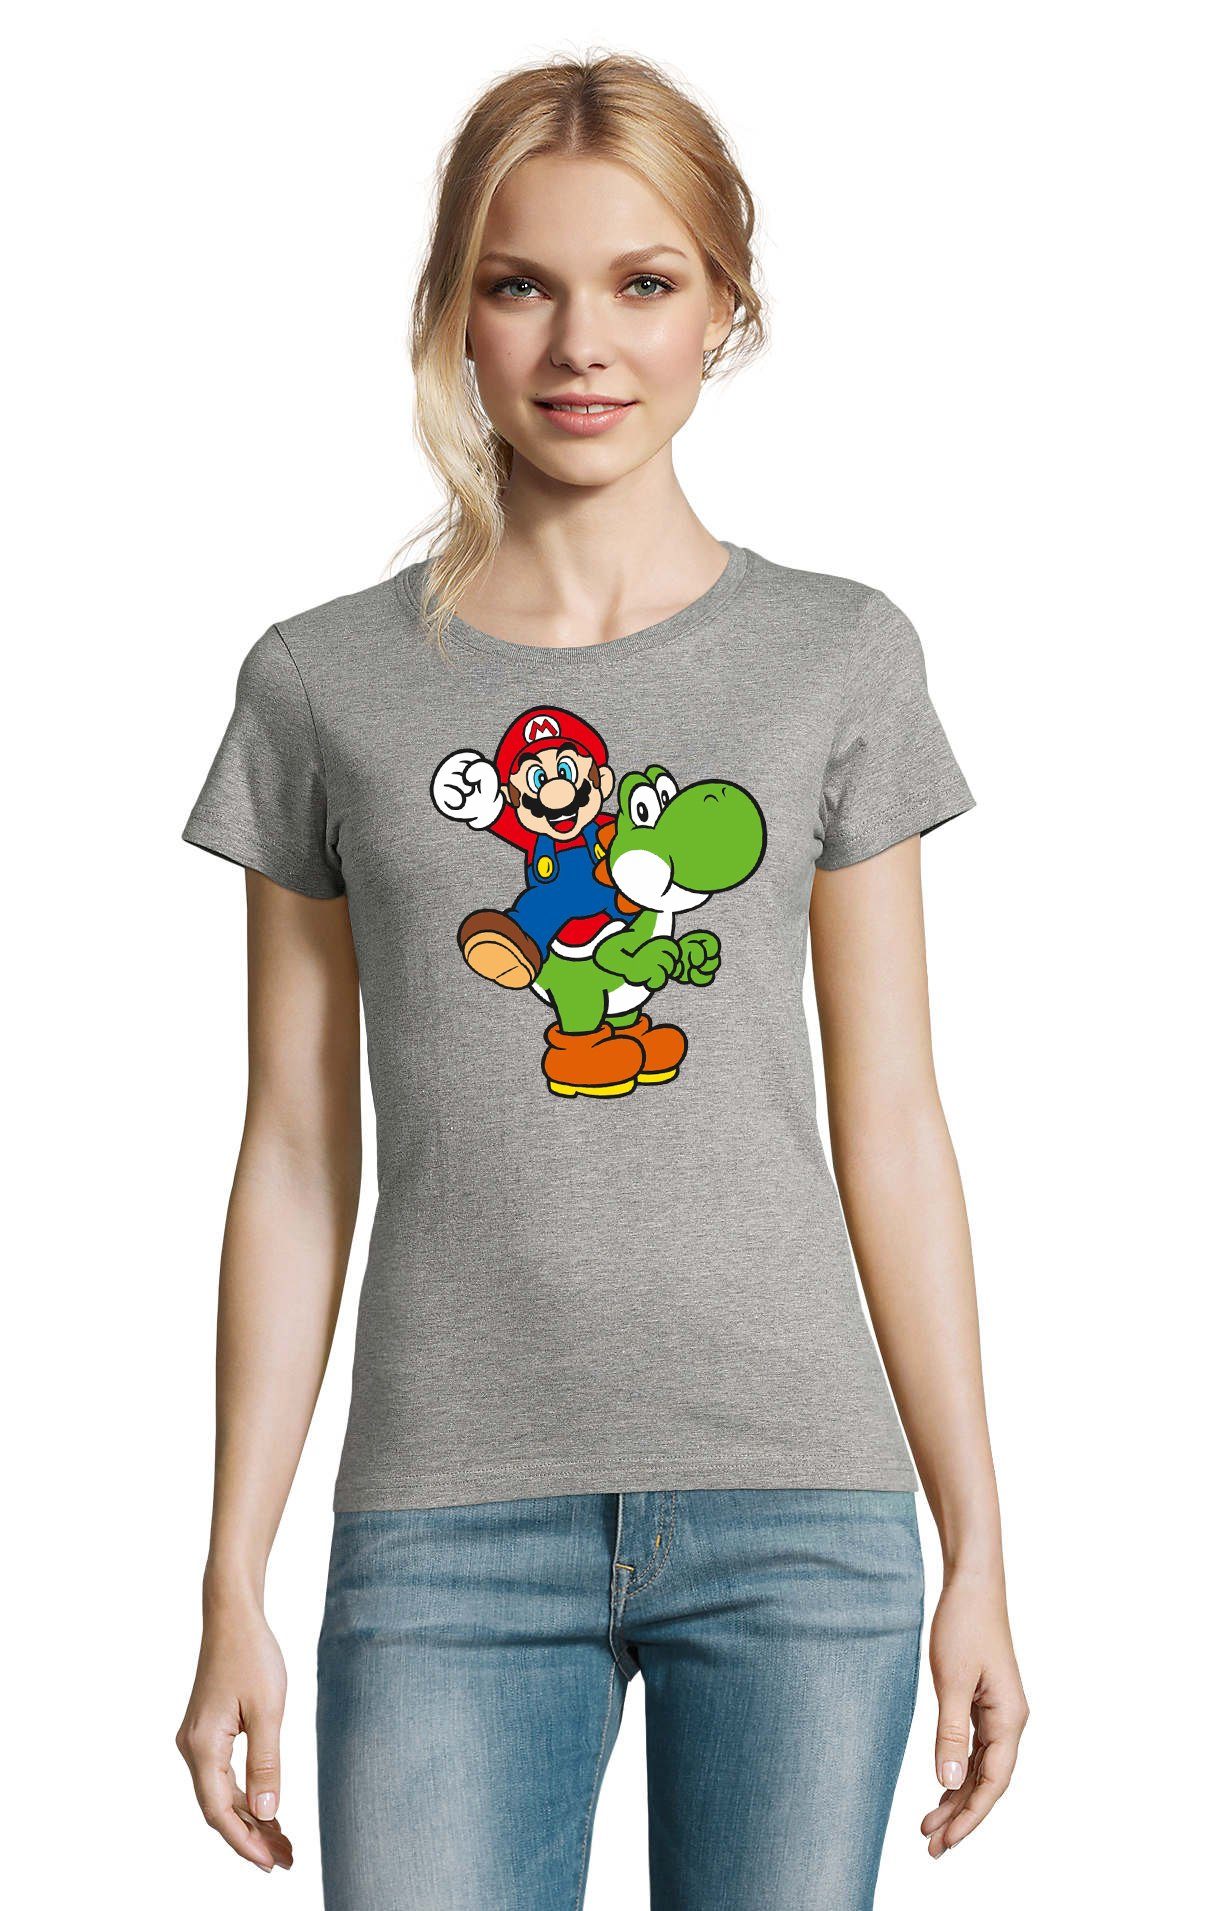 Blondie & Brownie T-Shirt Damen Yoshi & Mario Gaming Geek Konsole Super Retro